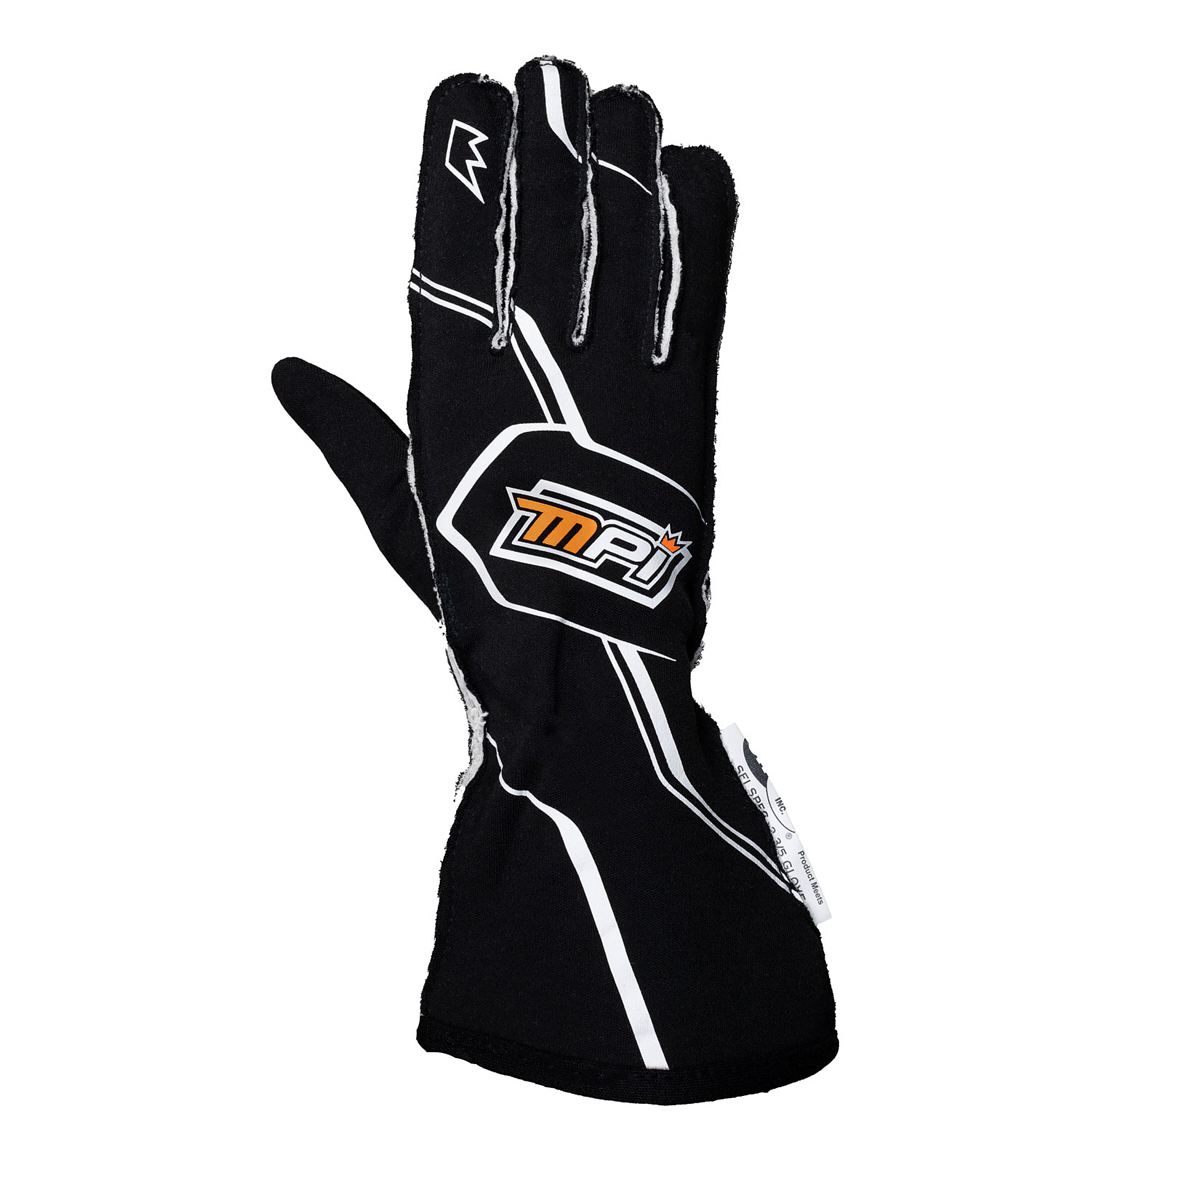 MPI USA MPI-GL-B-XS Driving Gloves, SFI 3.3/5, Double Layer, Nomex, Padded Palm, Black / White, X-Small, Pair